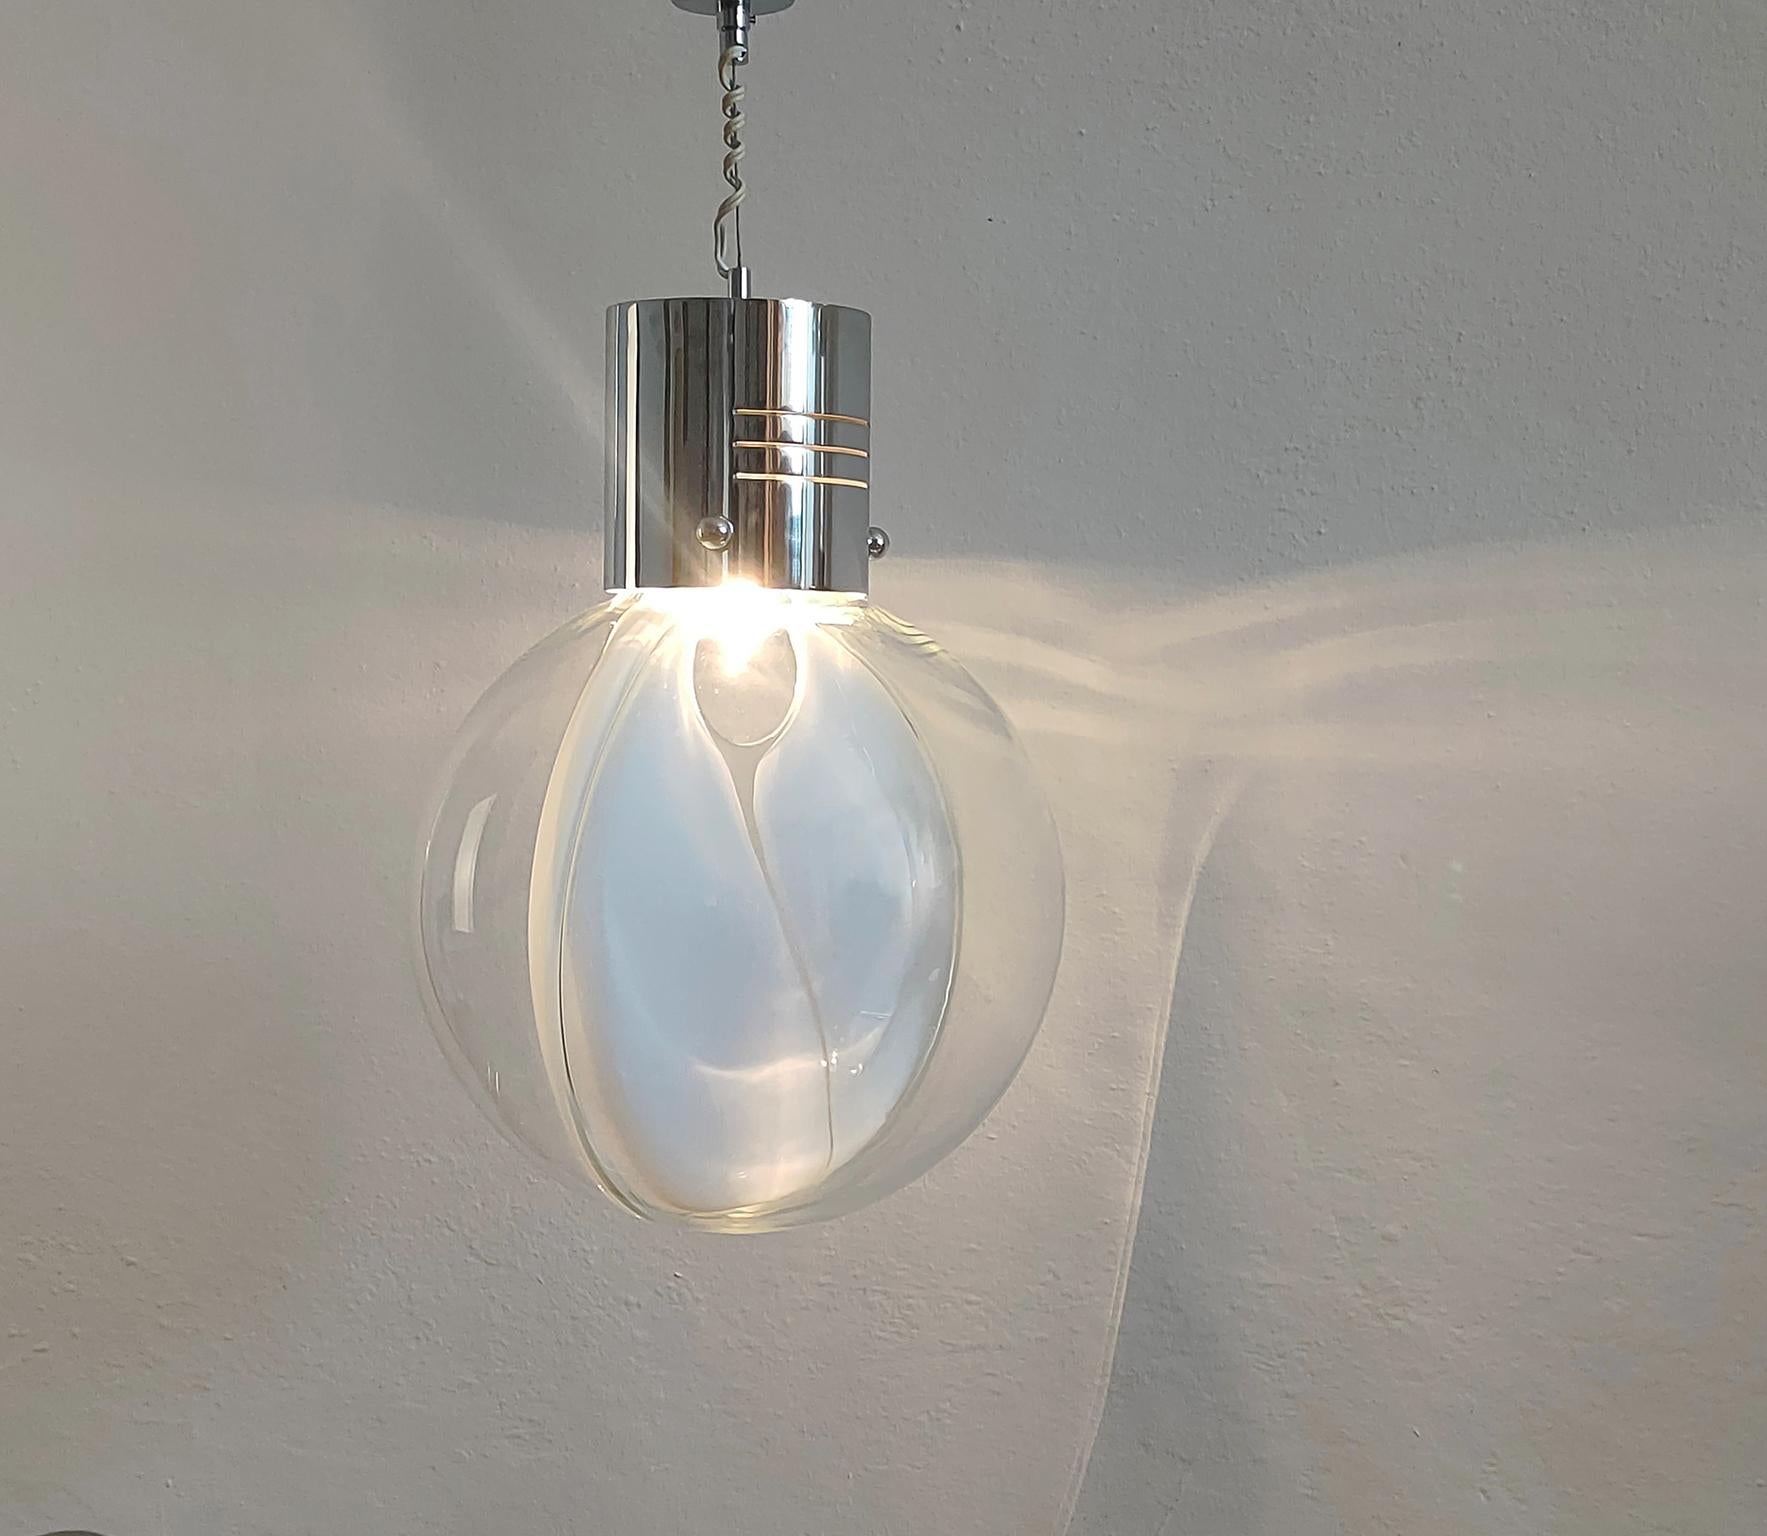 Mid-20th Century Toni Zuccheri Membrana Ceiling Lamp in Murano Glass by Venini 1960s Italy For Sale